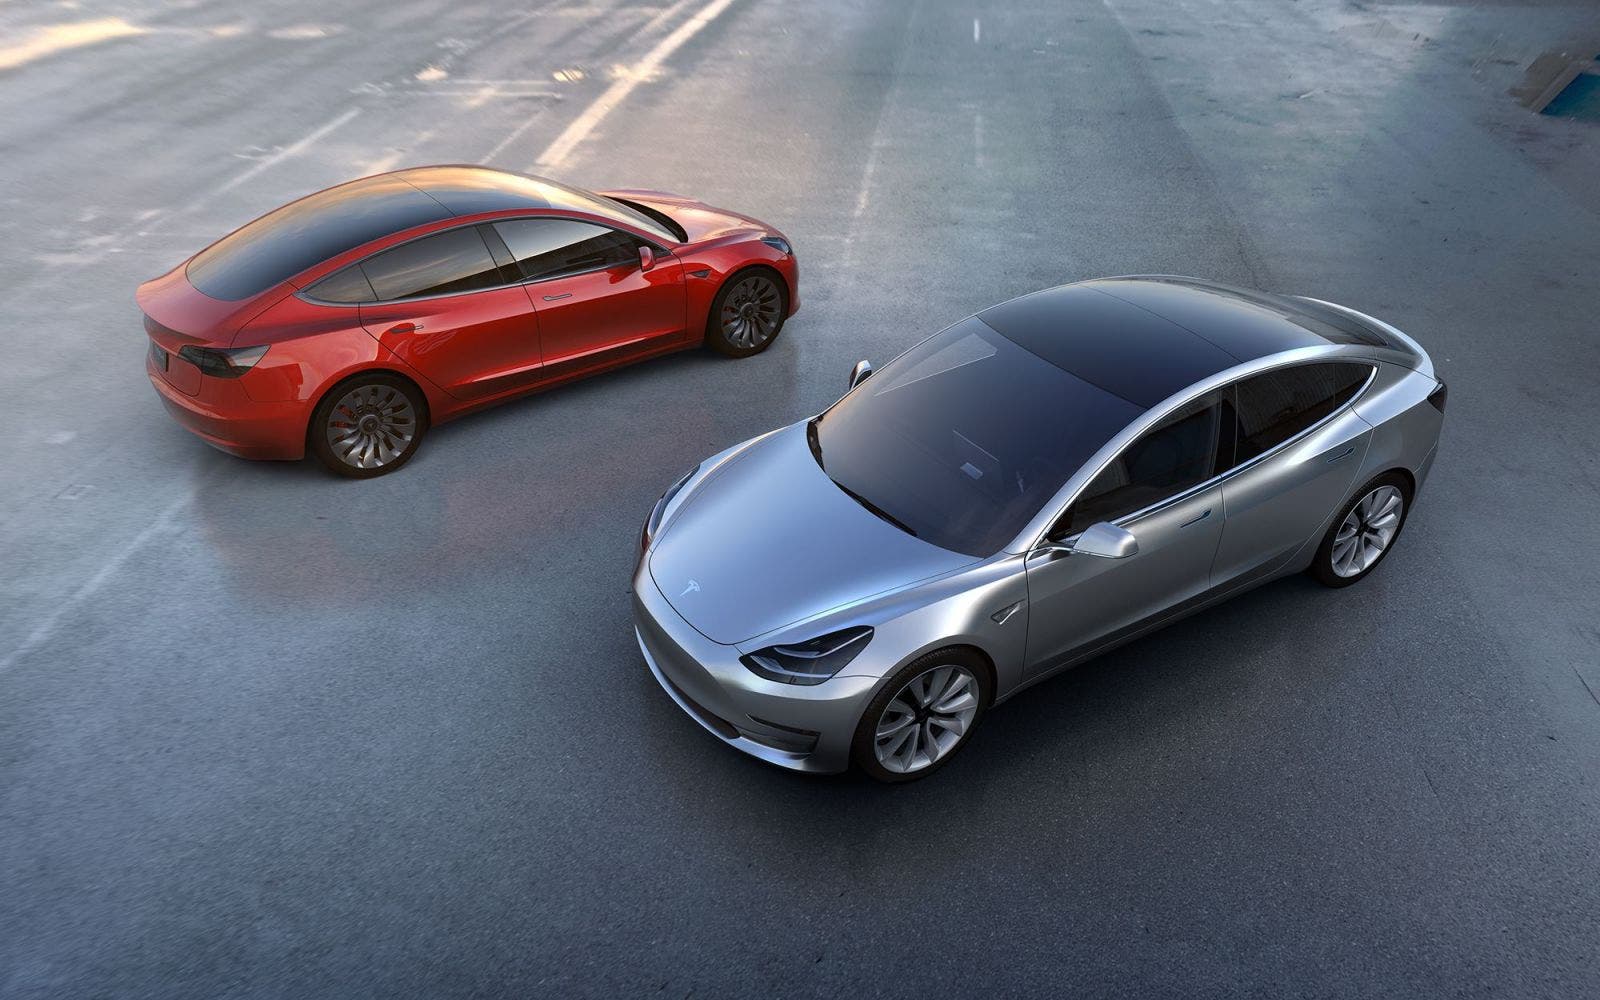 Neue E-Auto Akku-Technologie: Diese Firmen wollen Tesla abhängen -  EFAHRER.com